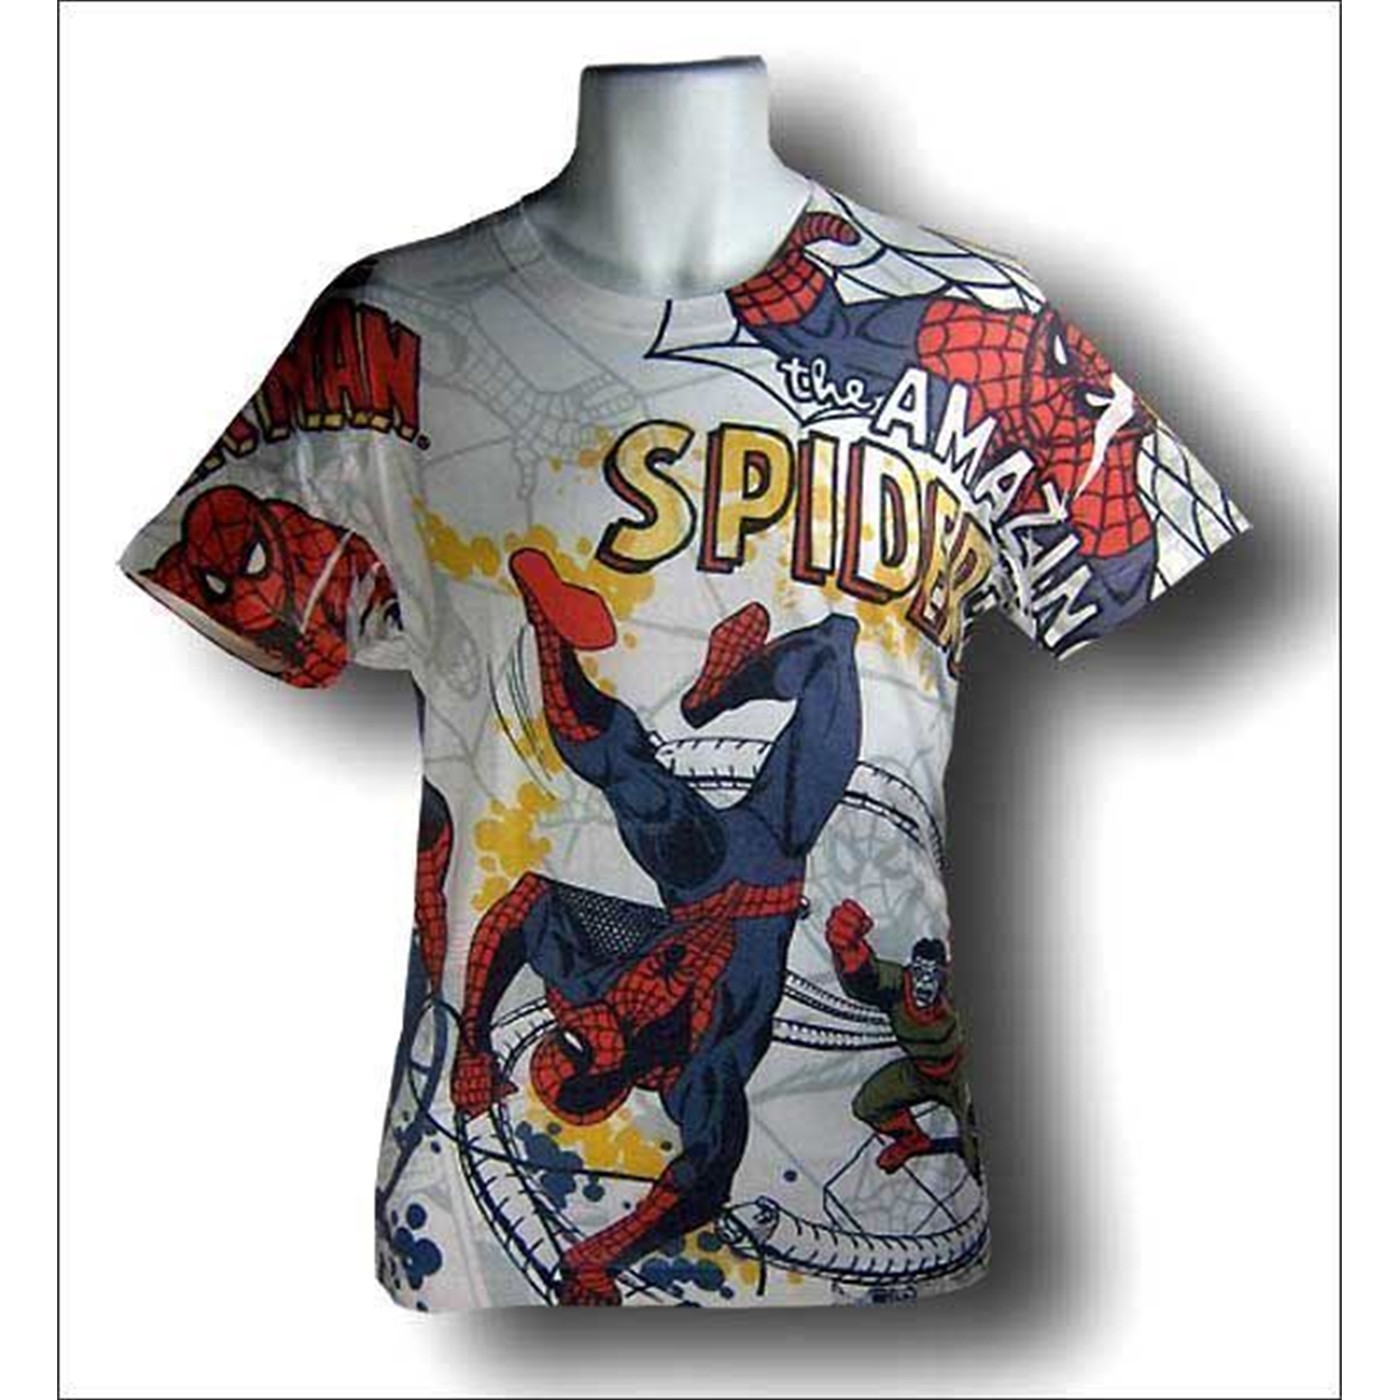 Spiderman Sublimation T-shirt